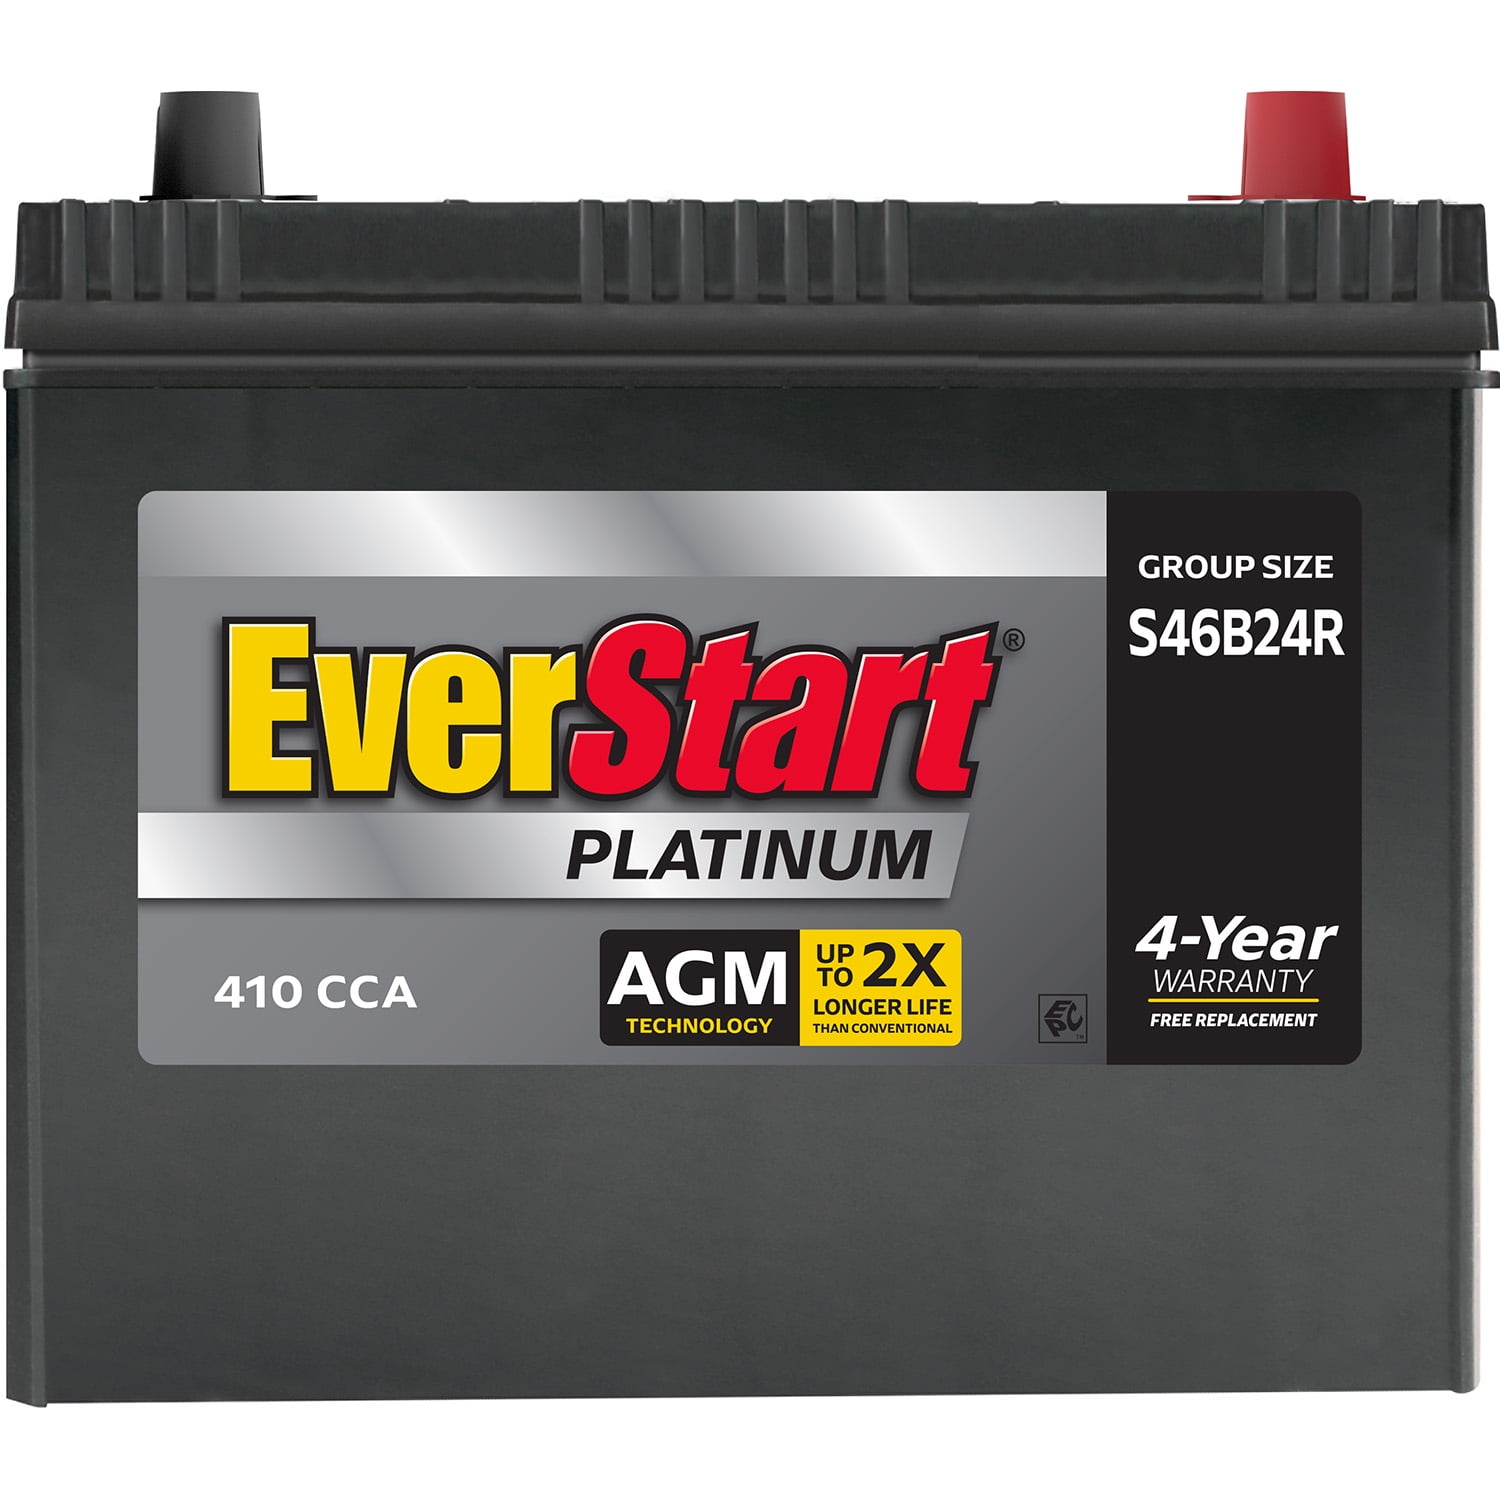 EverStart Platinum AGM Automotive Battery, Group Size S46B24R 12 Volt, 410  CCA 